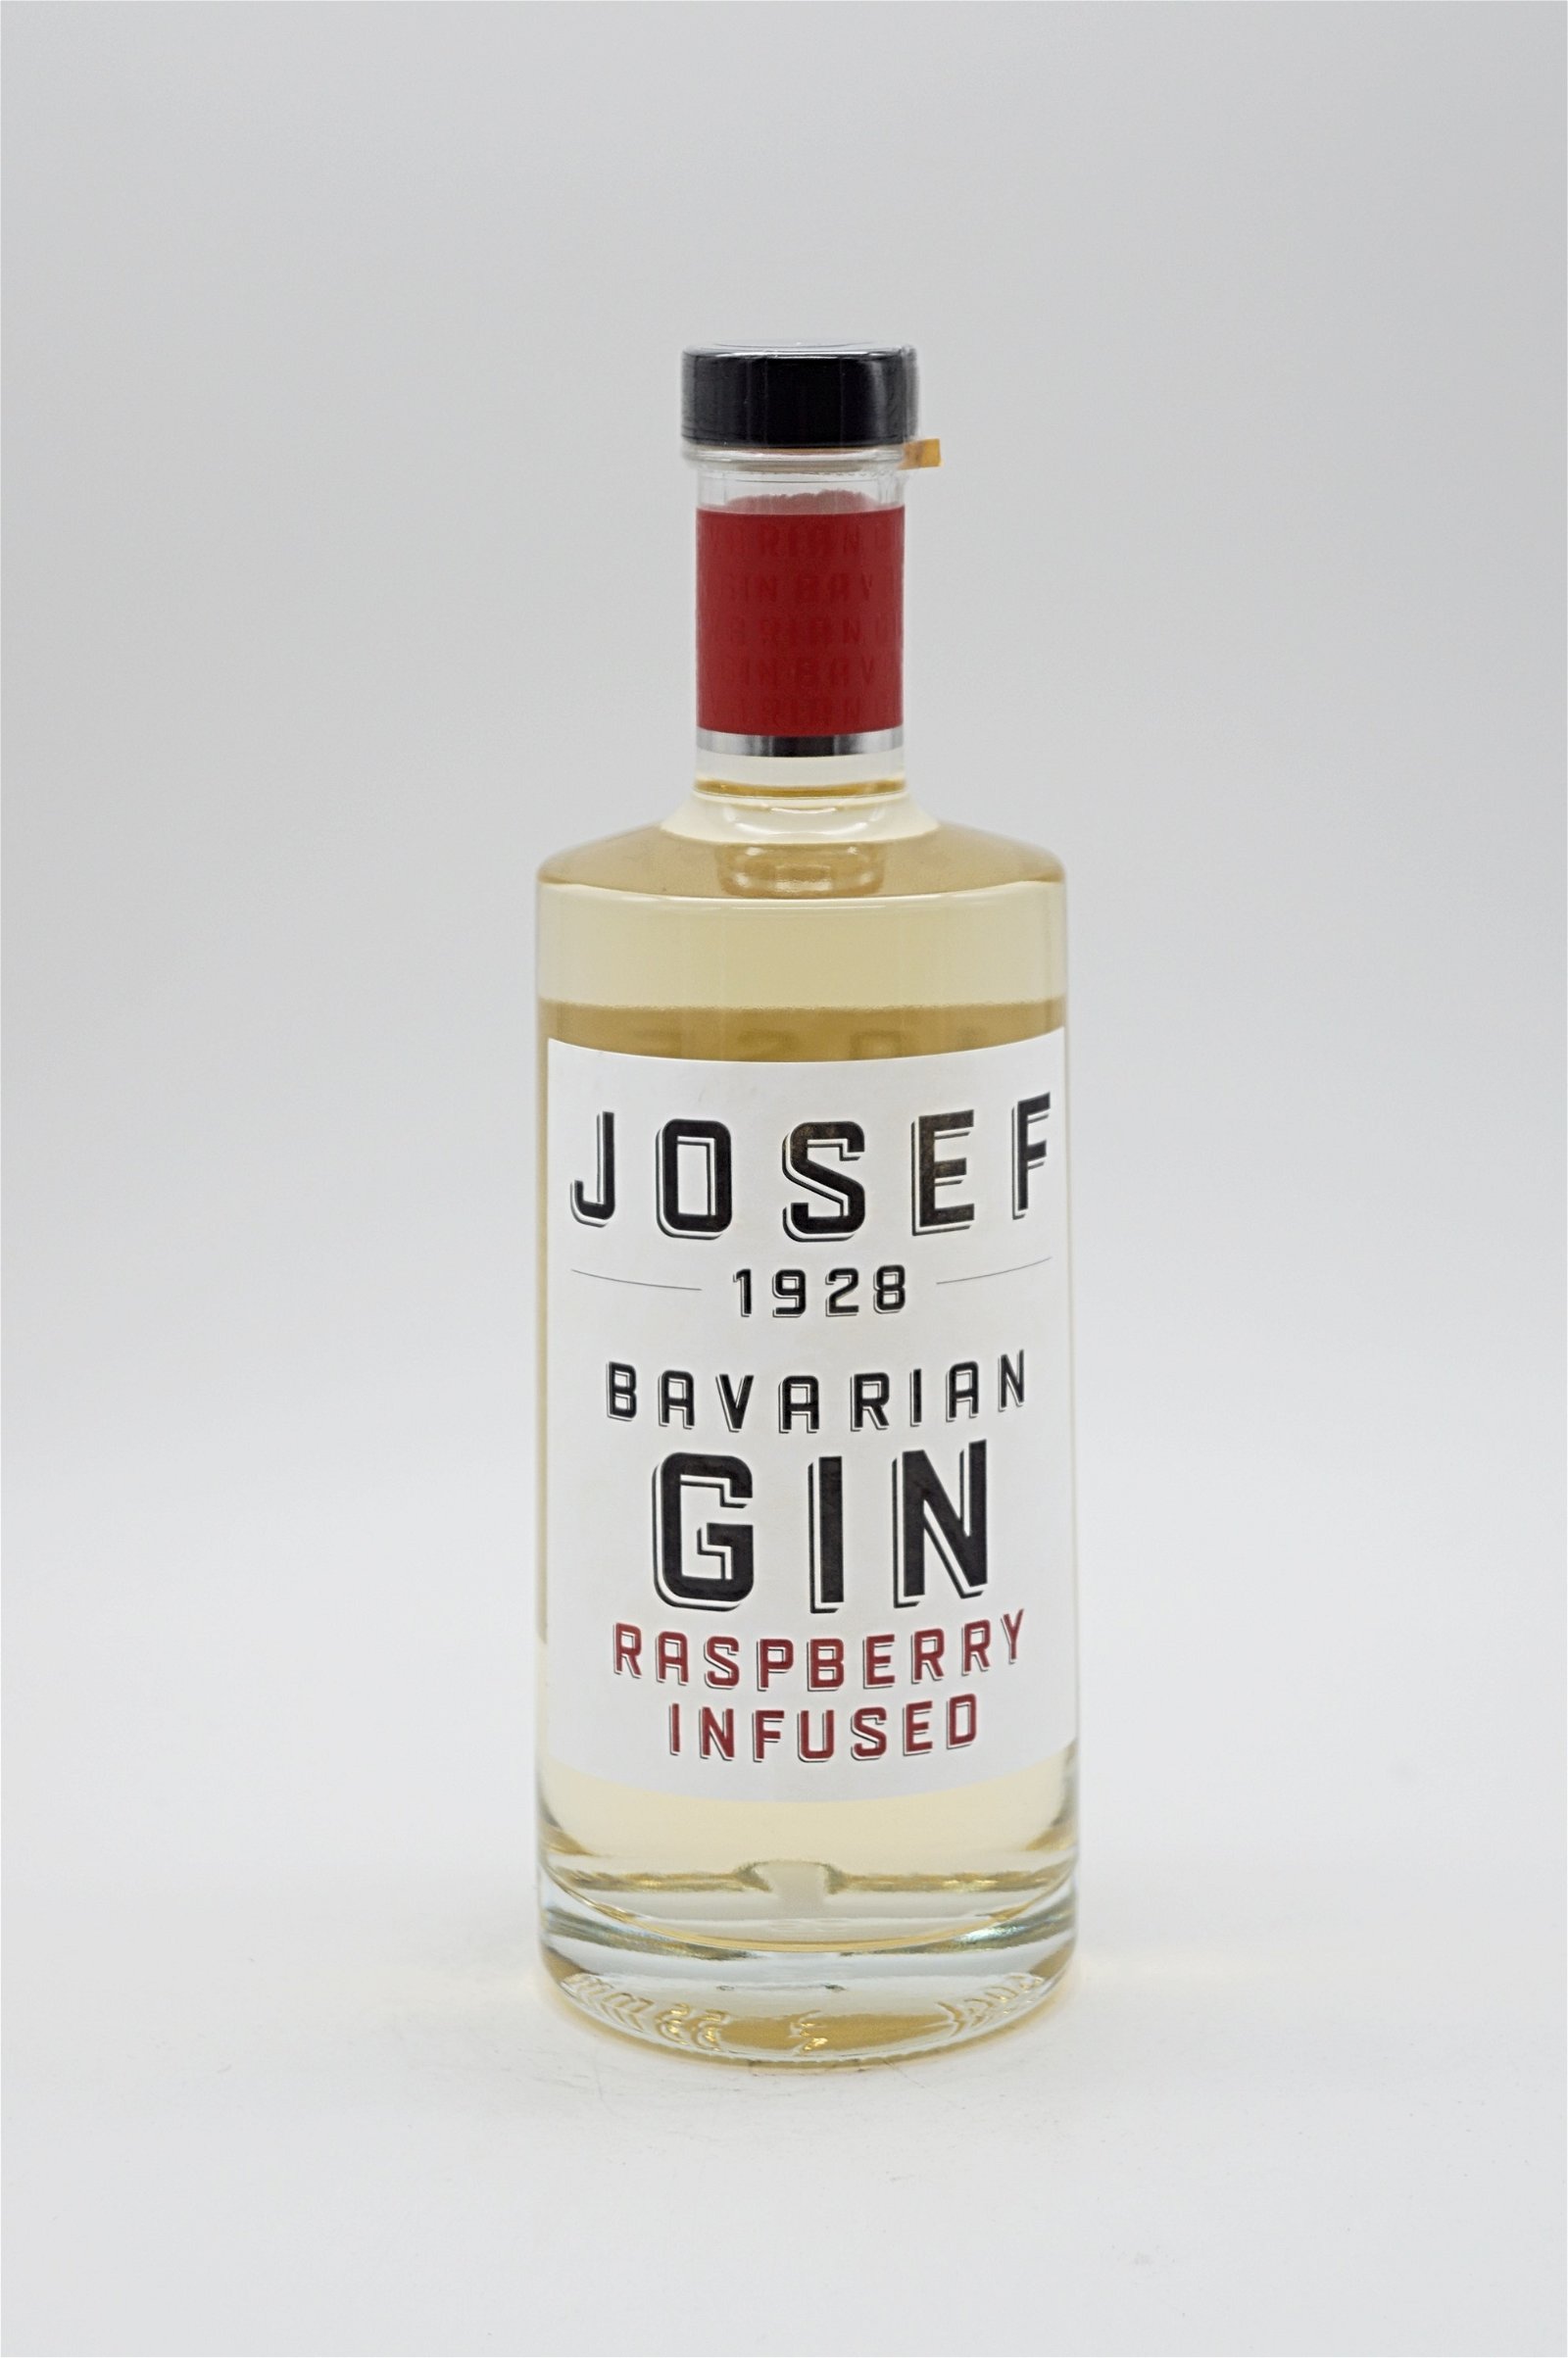 Josef 1928 Gin Raspberry Infused